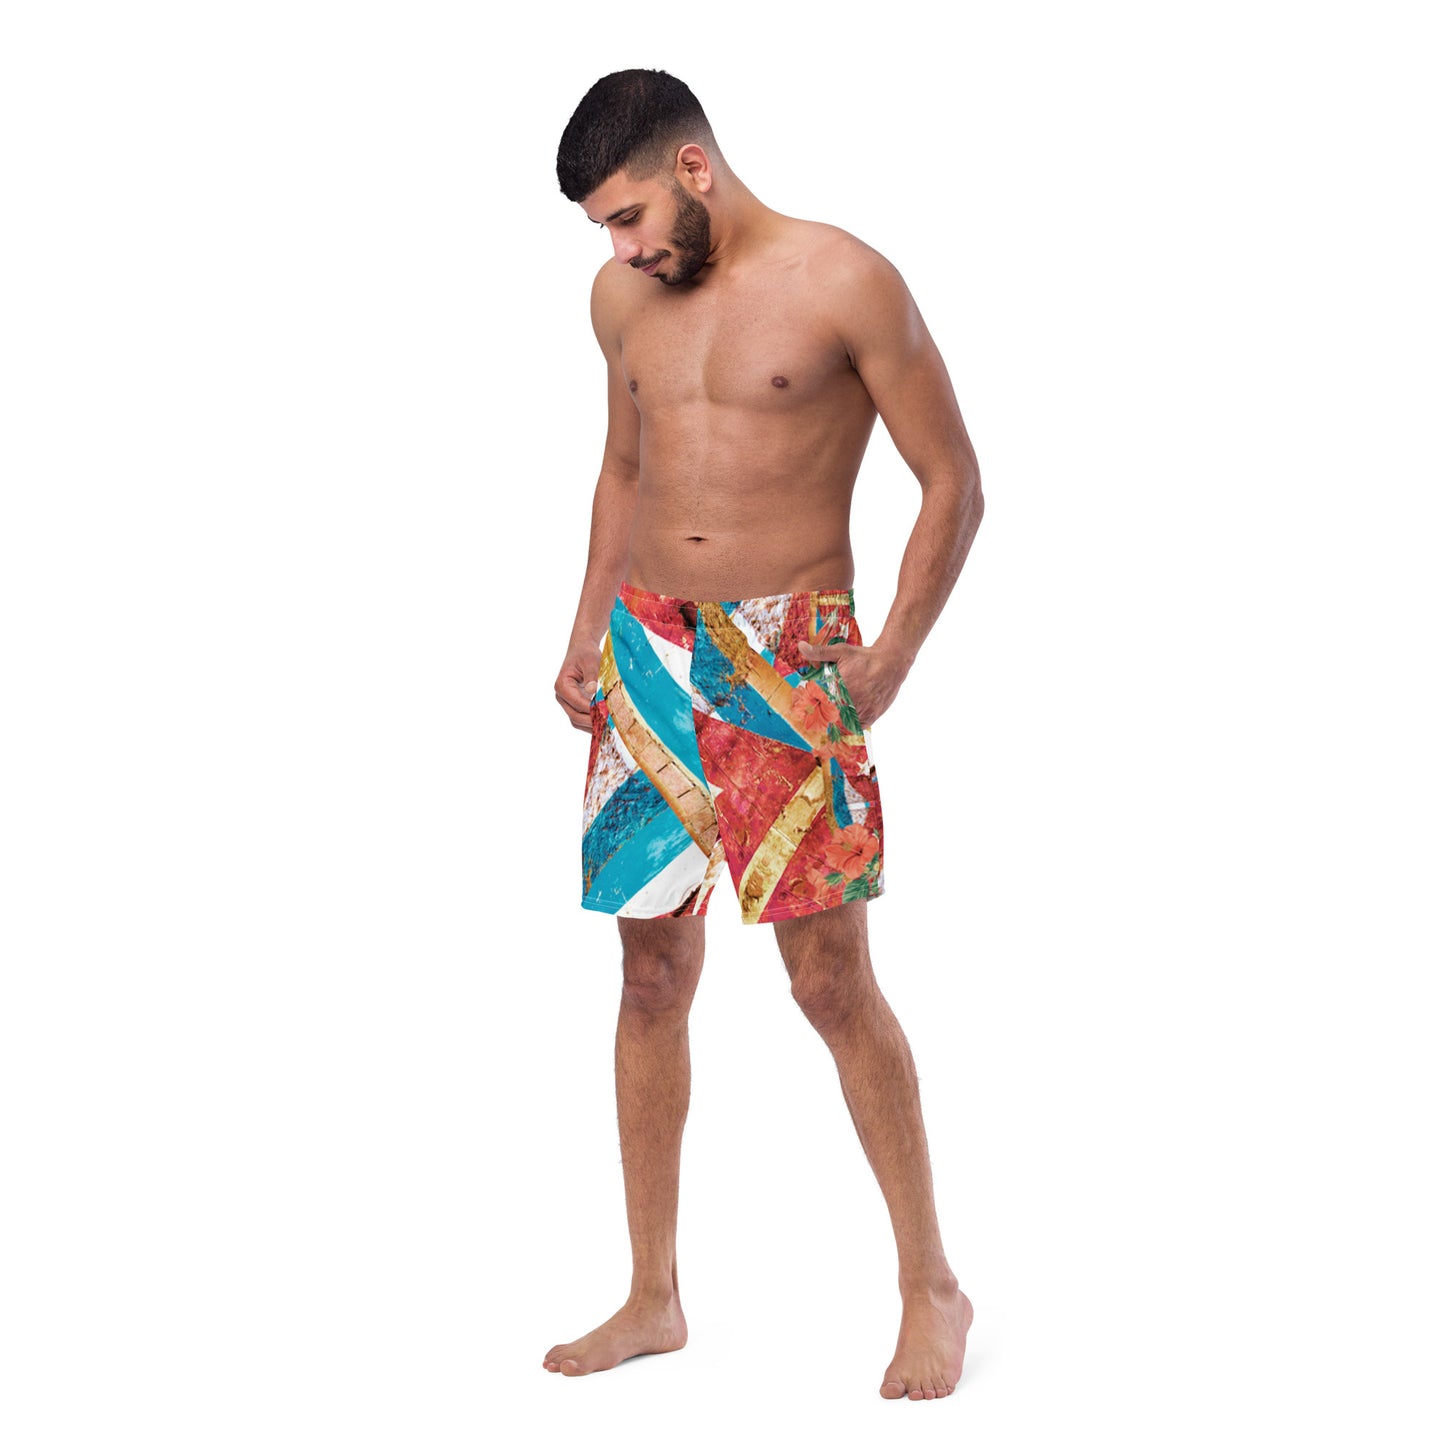 Bandera Men's swim trunks